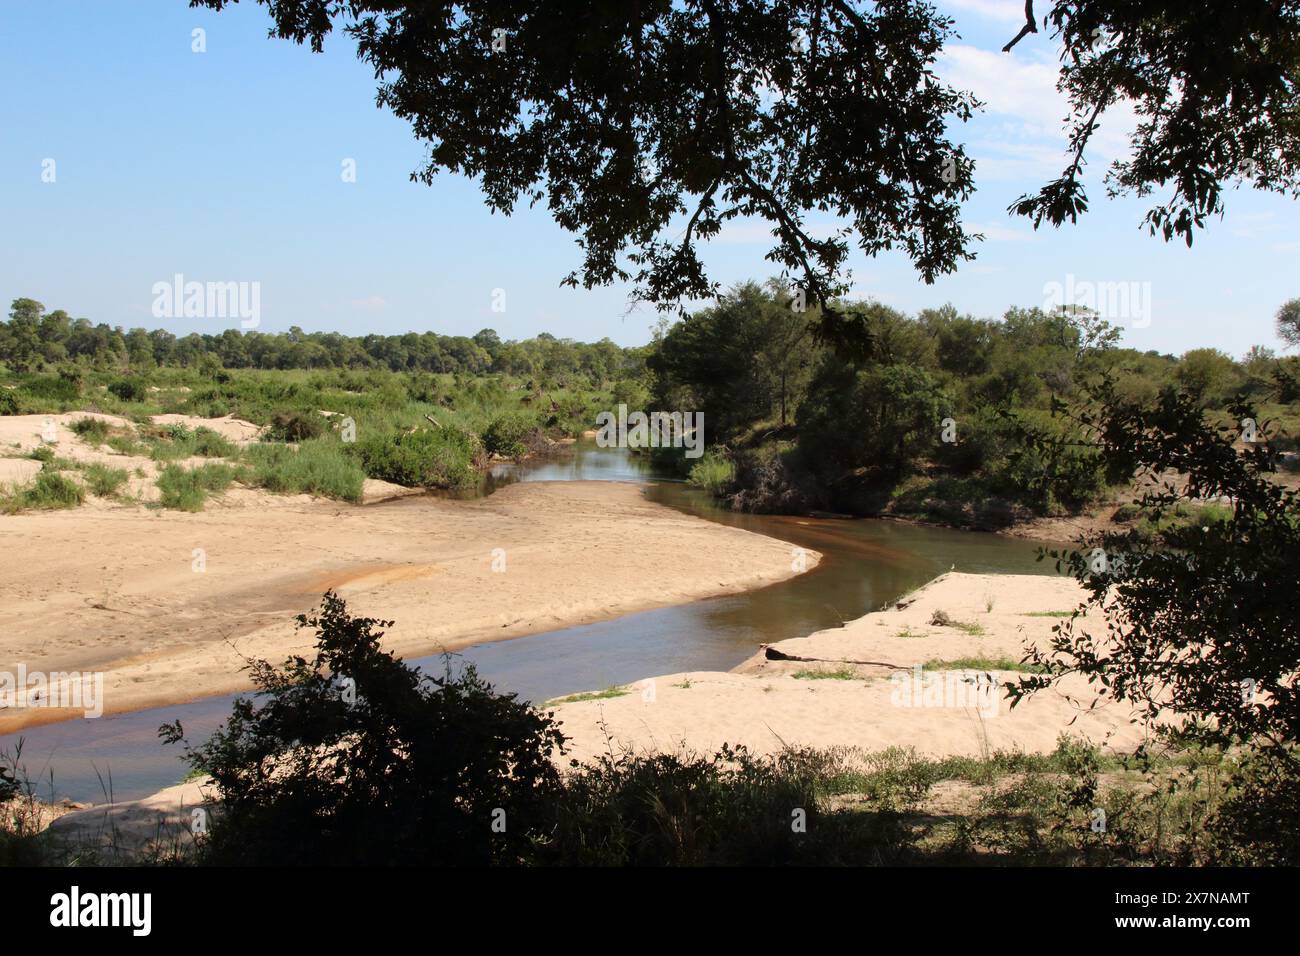 Afrikanischer Busch - Krügerpark - Sabie River / African Bush - Kruger Park - Sabie River / Foto Stock